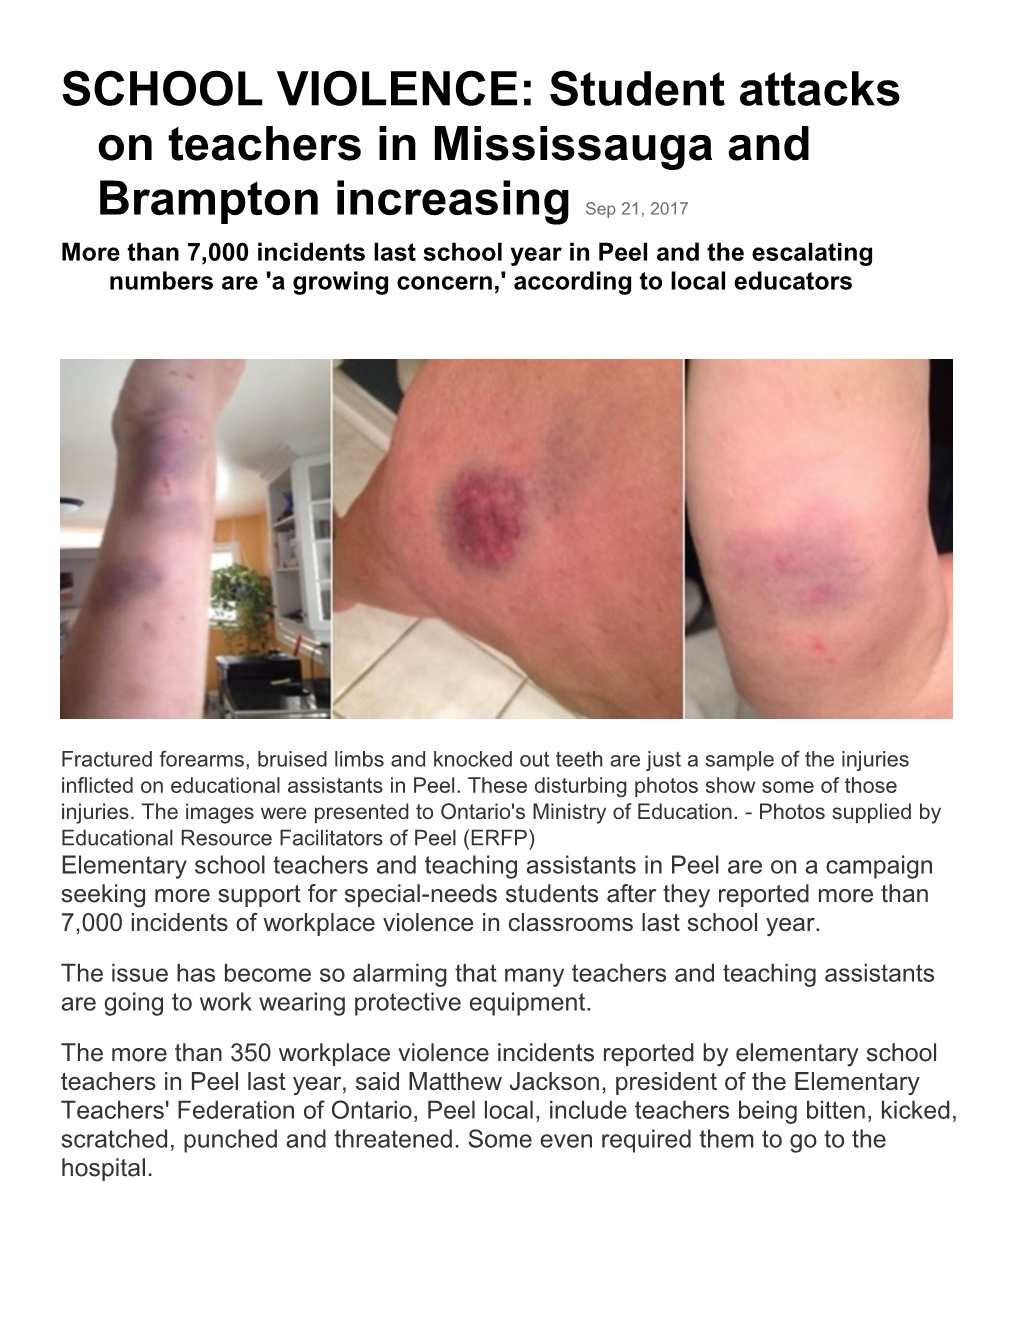 SCHOOL VIOLENCE: Student Attacks on Teachers in Mississauga and Brampton Increasingsep 21, 2017